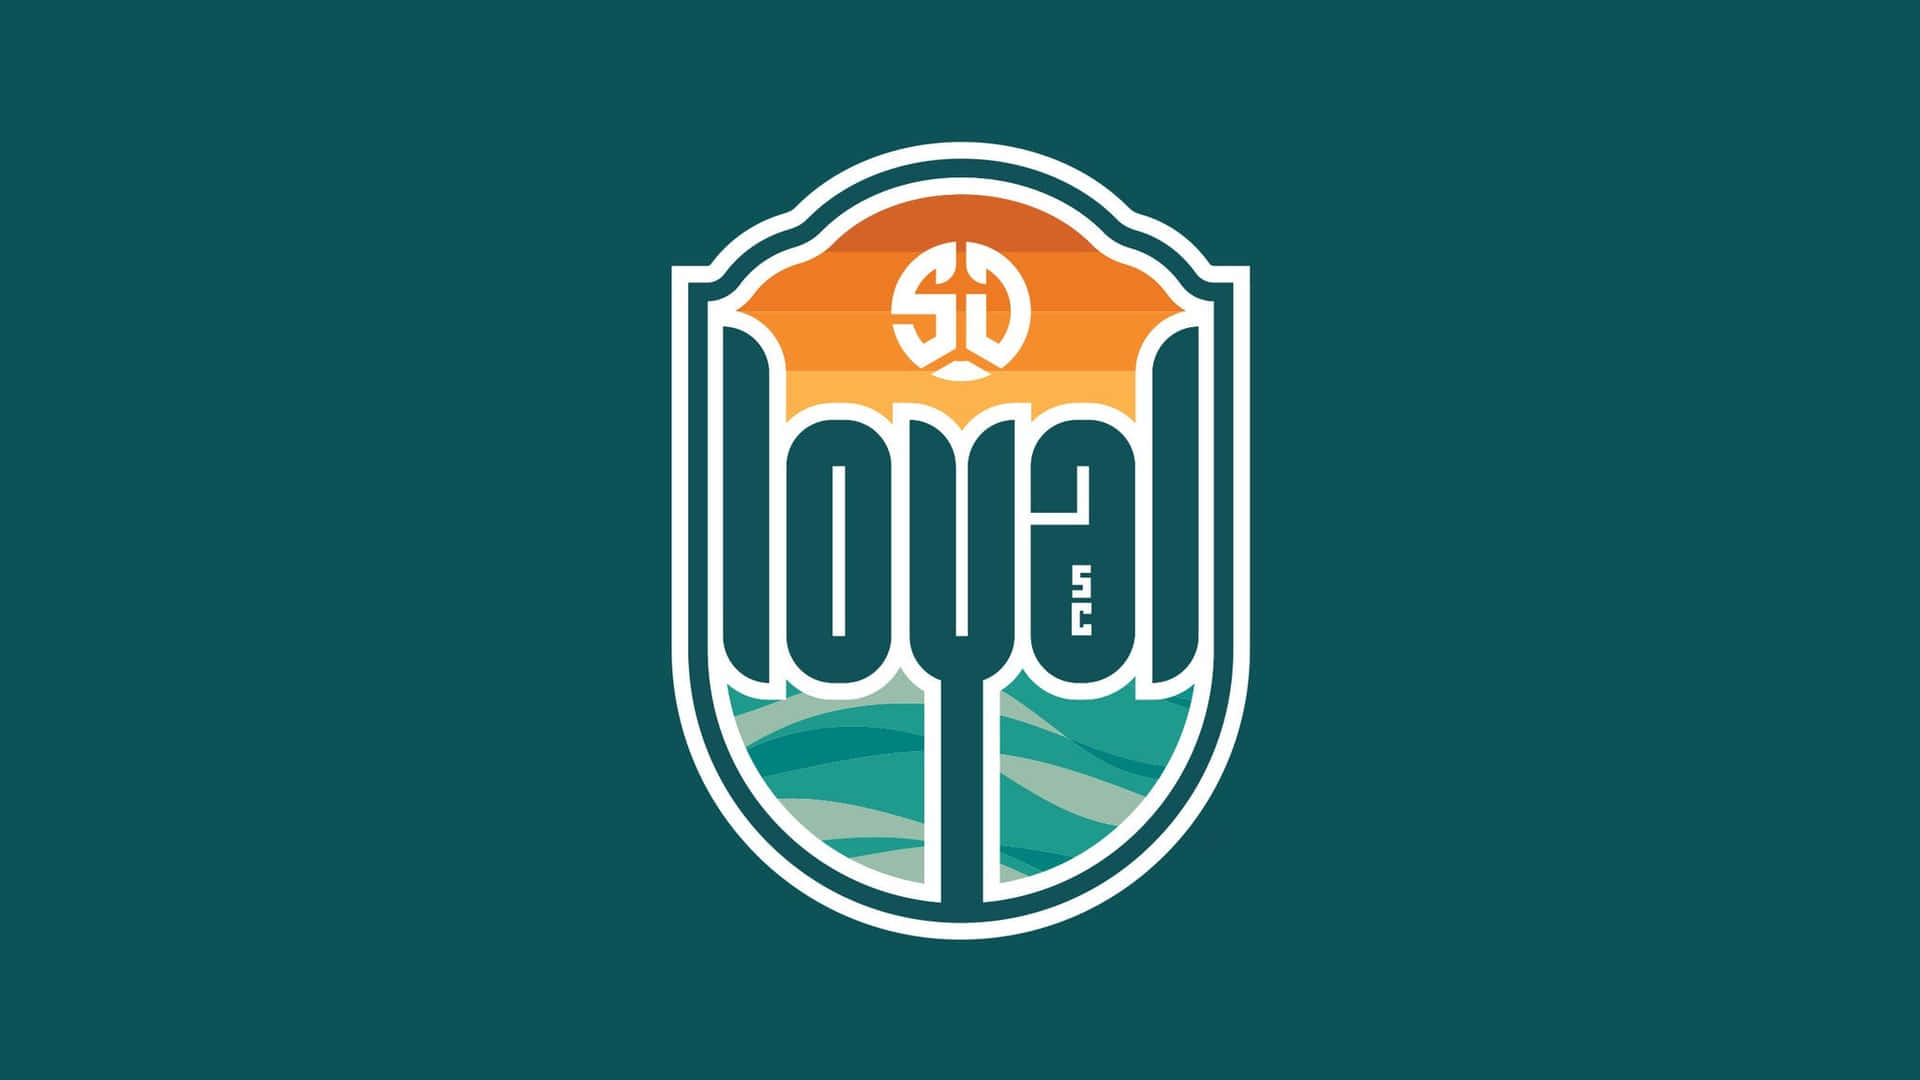 San Diego Loyal Sc Team Logo Wallpaper